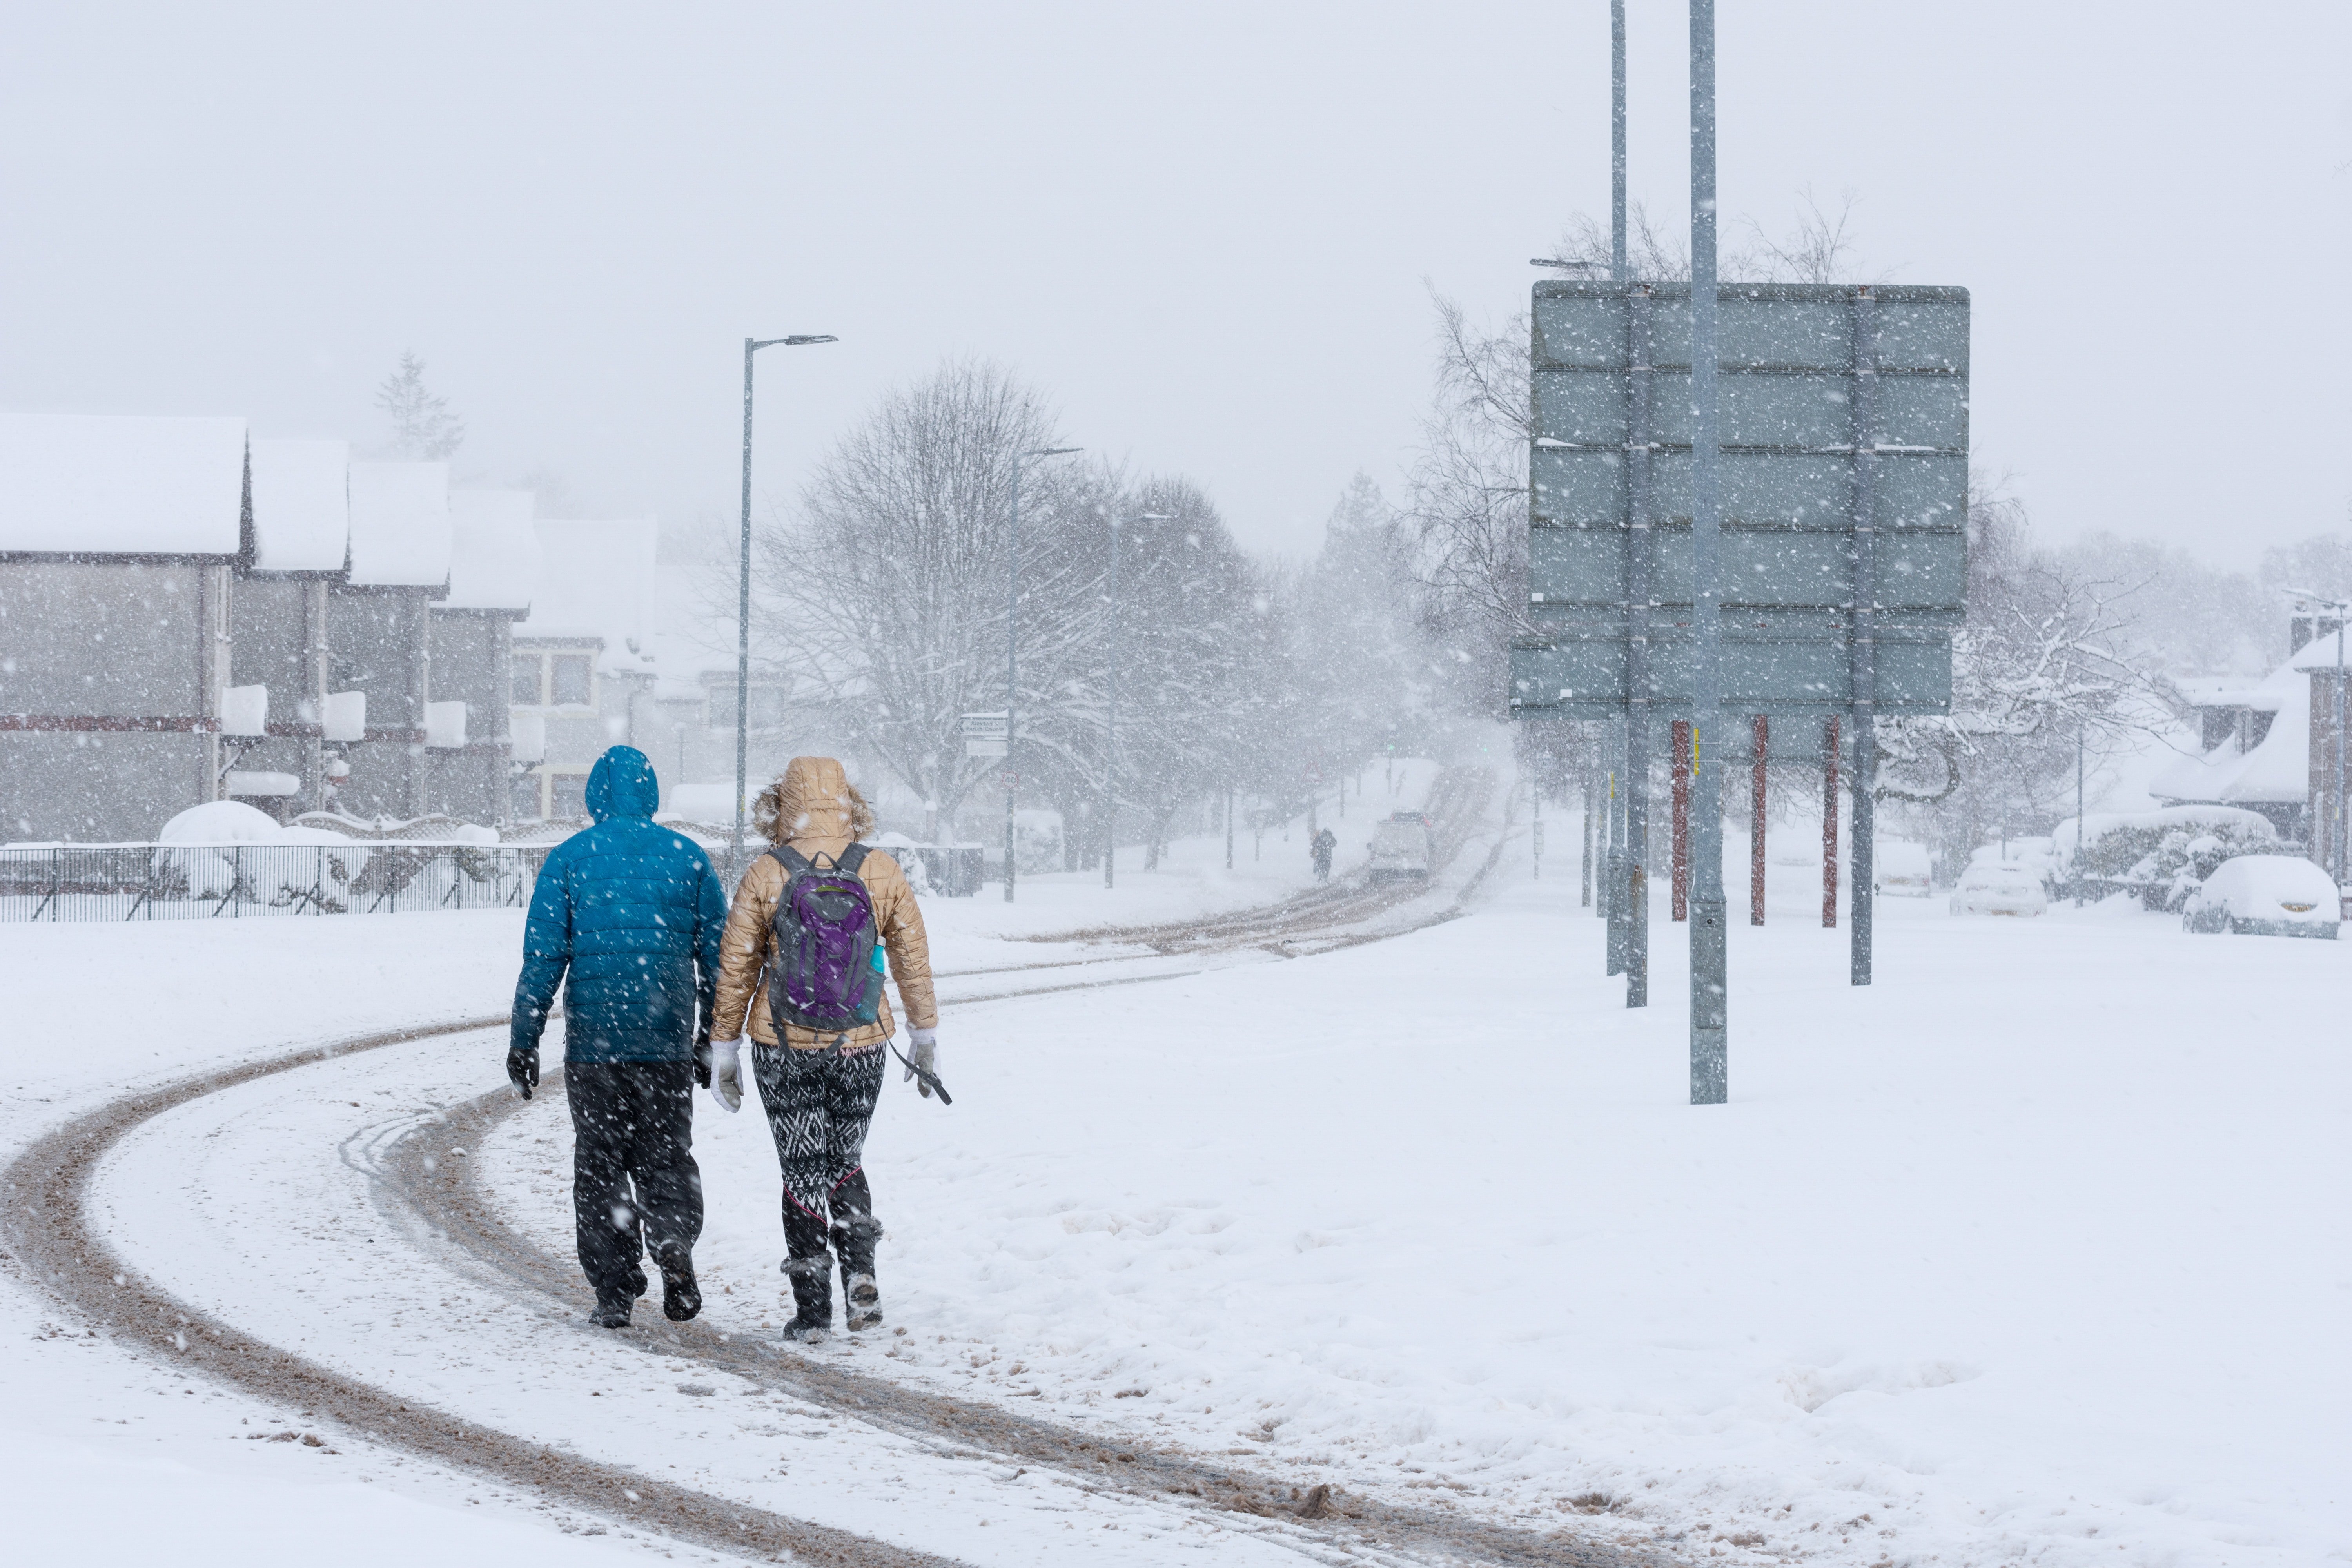 A snowy day in Scotland | Photo: Unsplash/garyellisphoto 